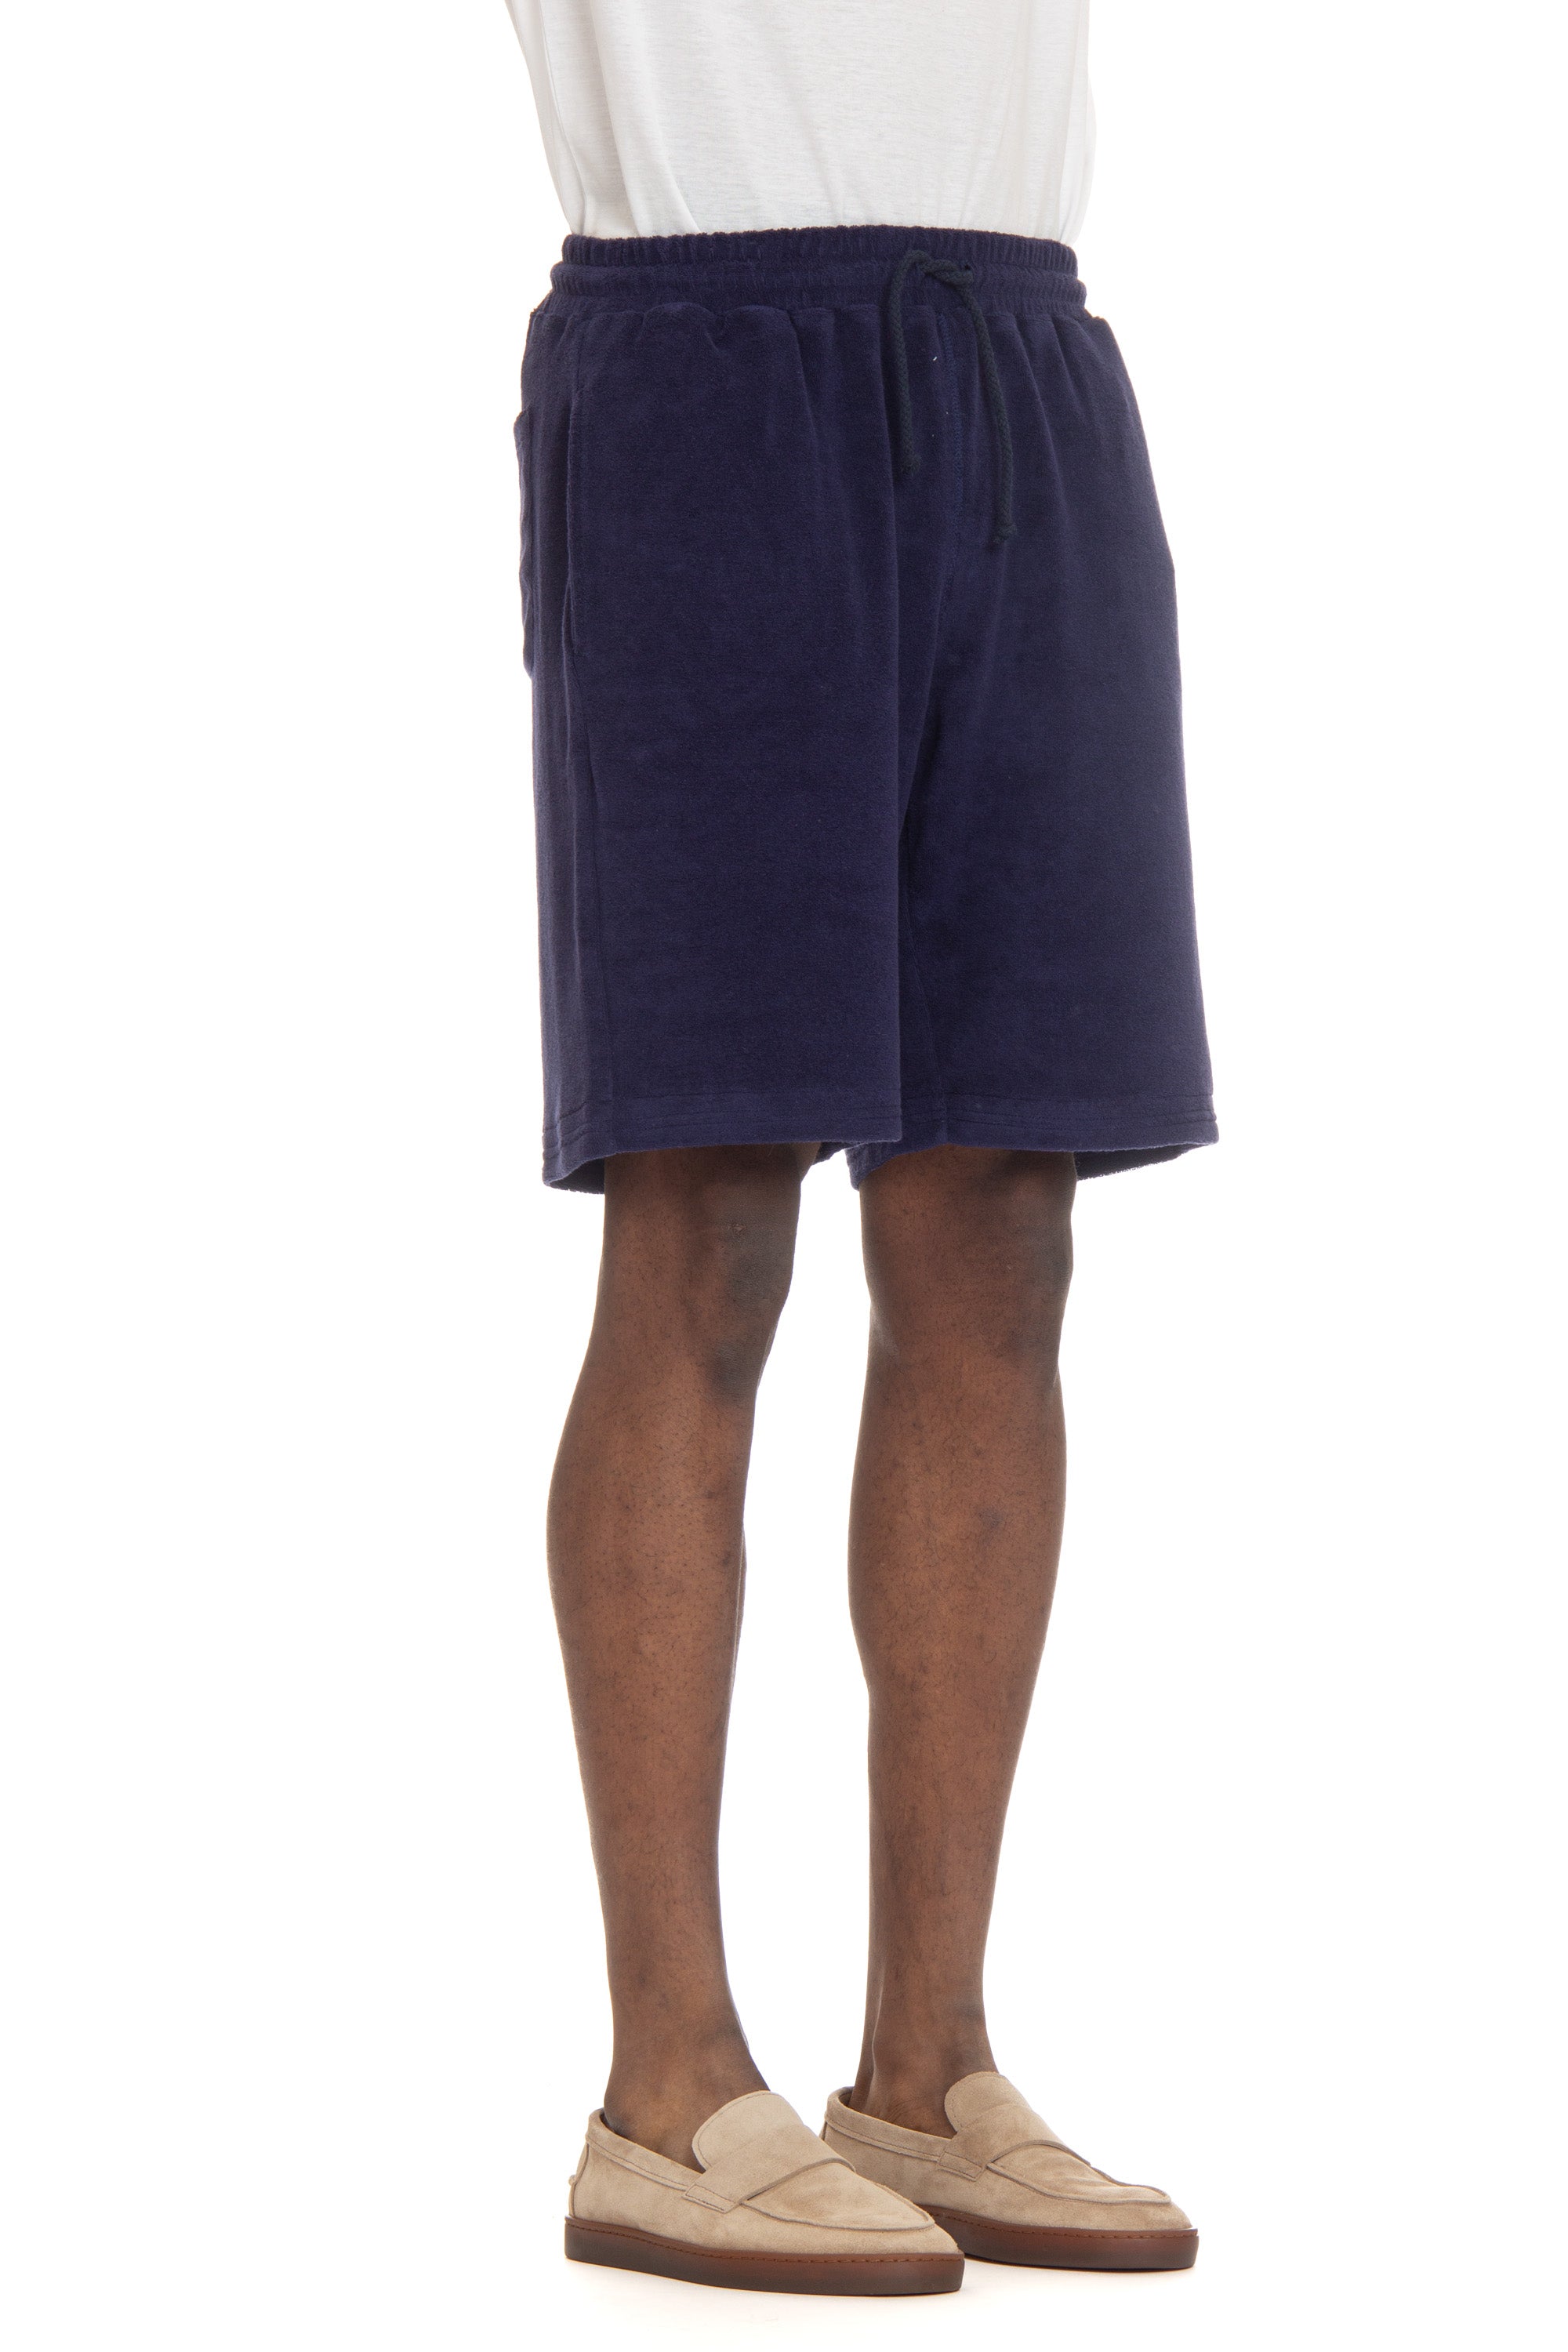 Terry Bermuda shorts